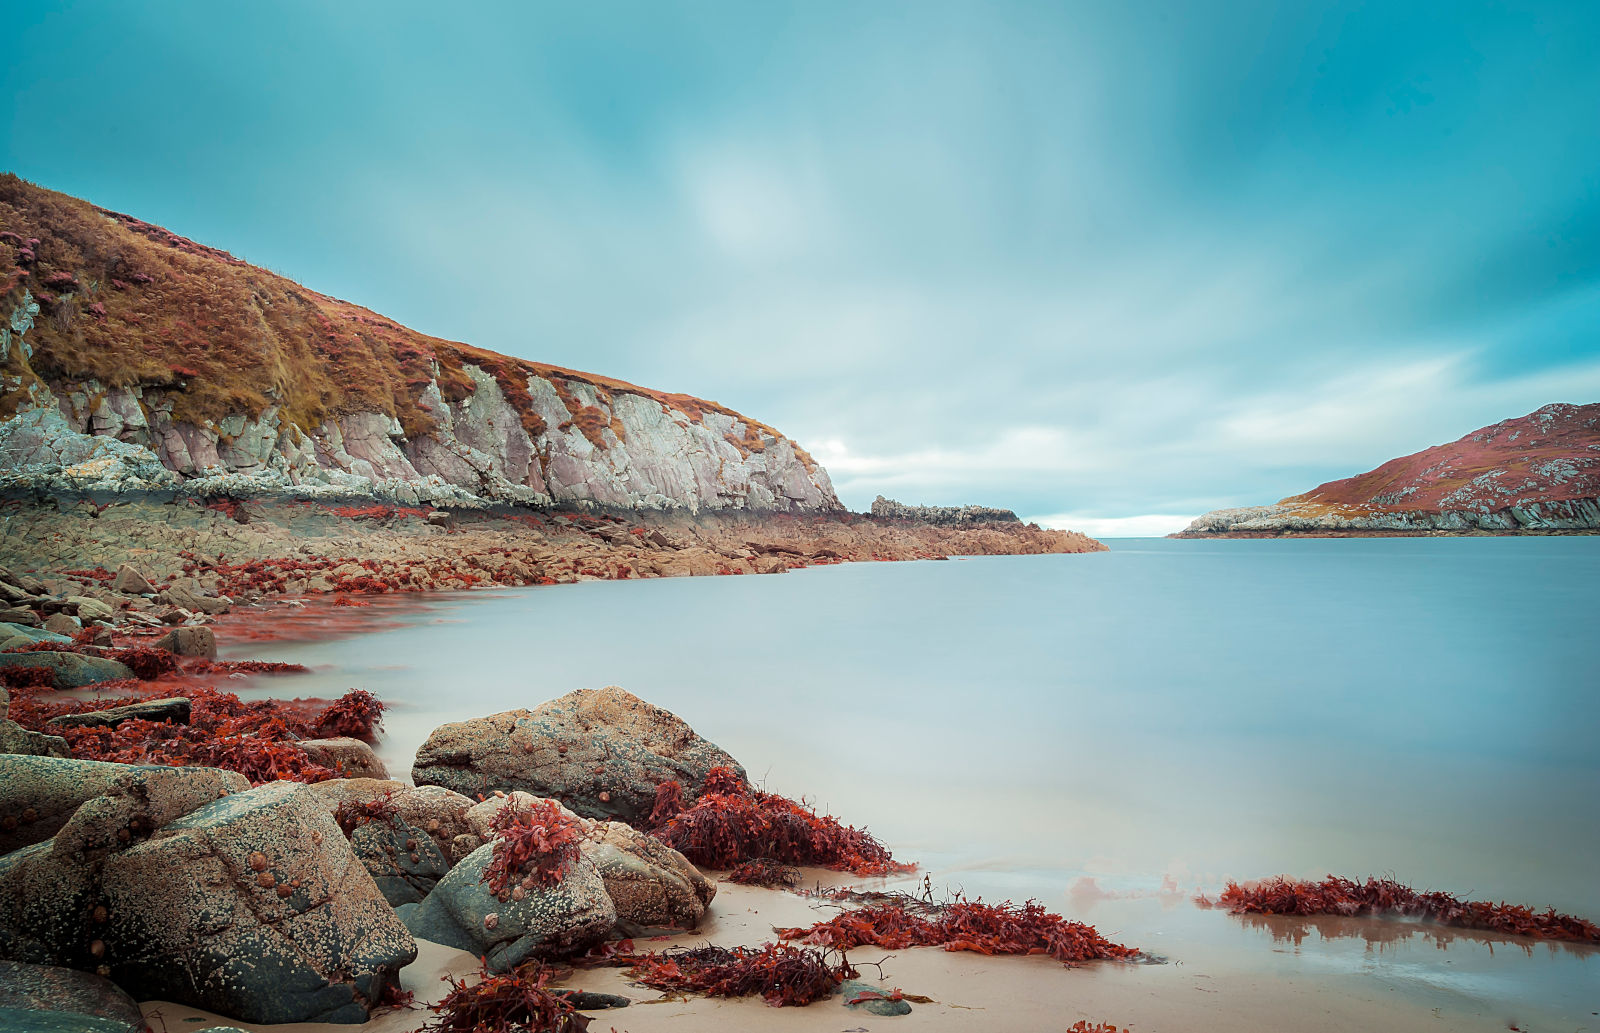 Photo of the rocks and seaweed at Dunree Beach